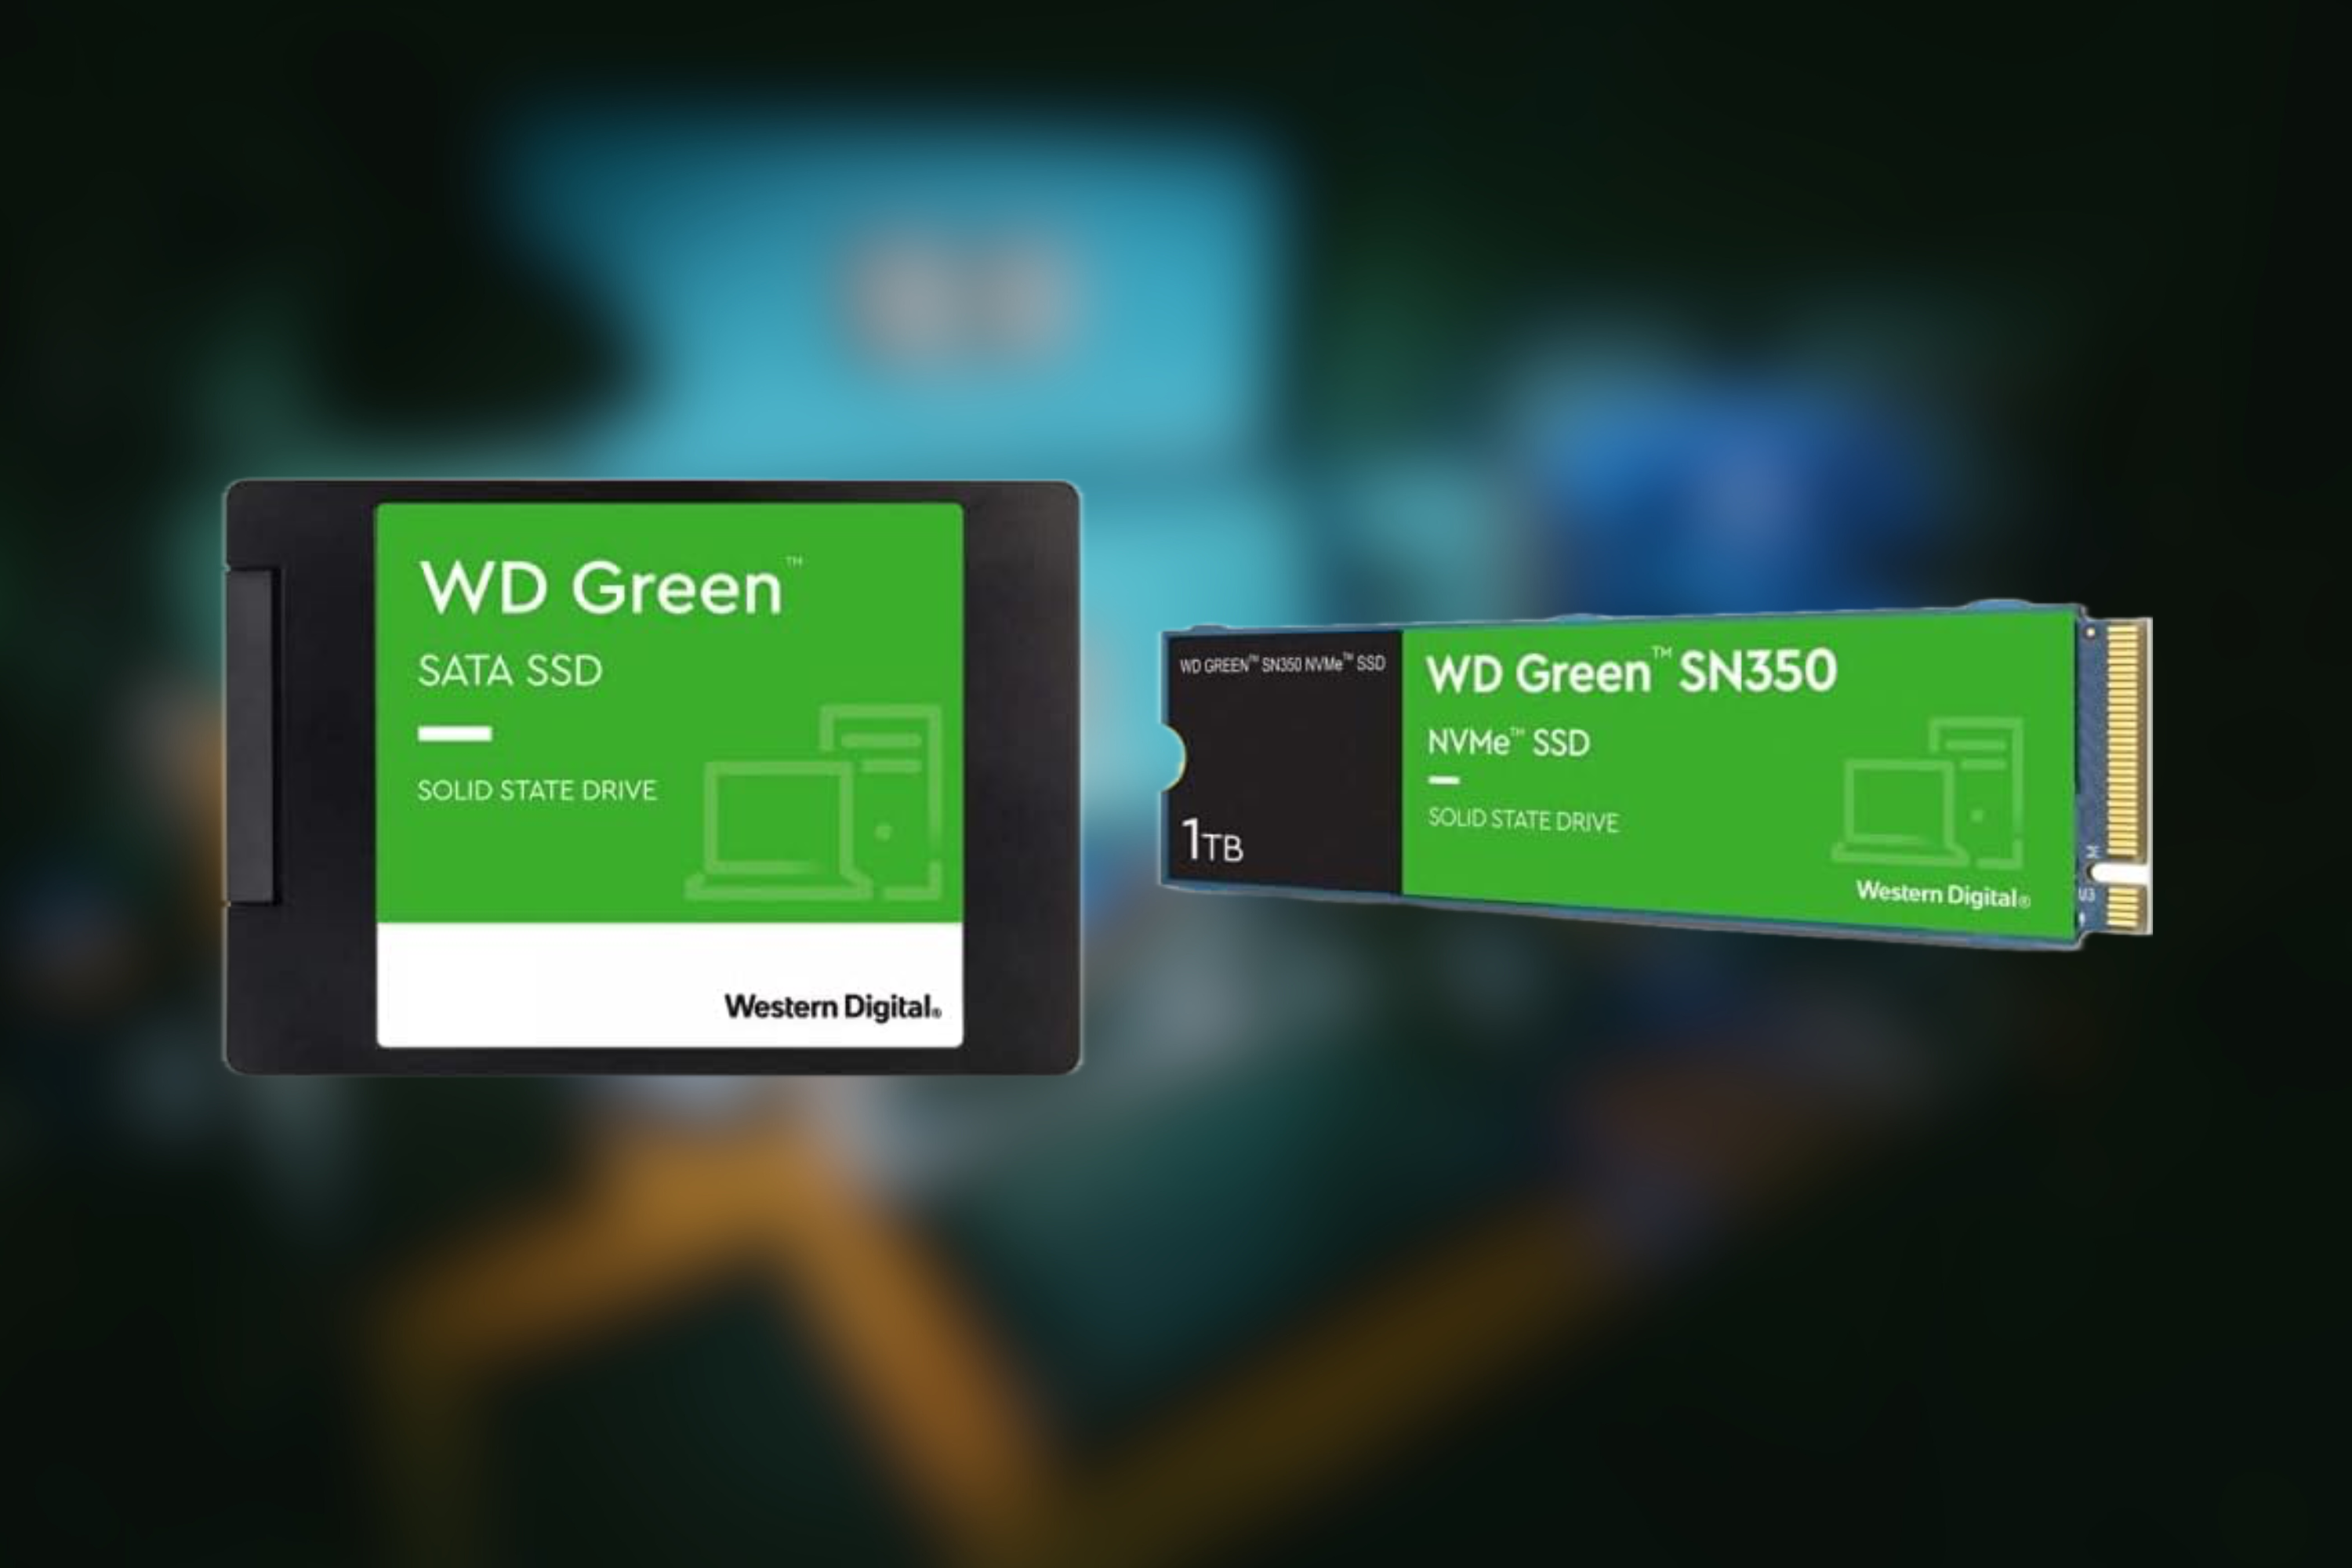 Western Digital 1TB WD Green Internal SSD and 1TB WD Green SN350 NVMe Internal SSD on blurred background 